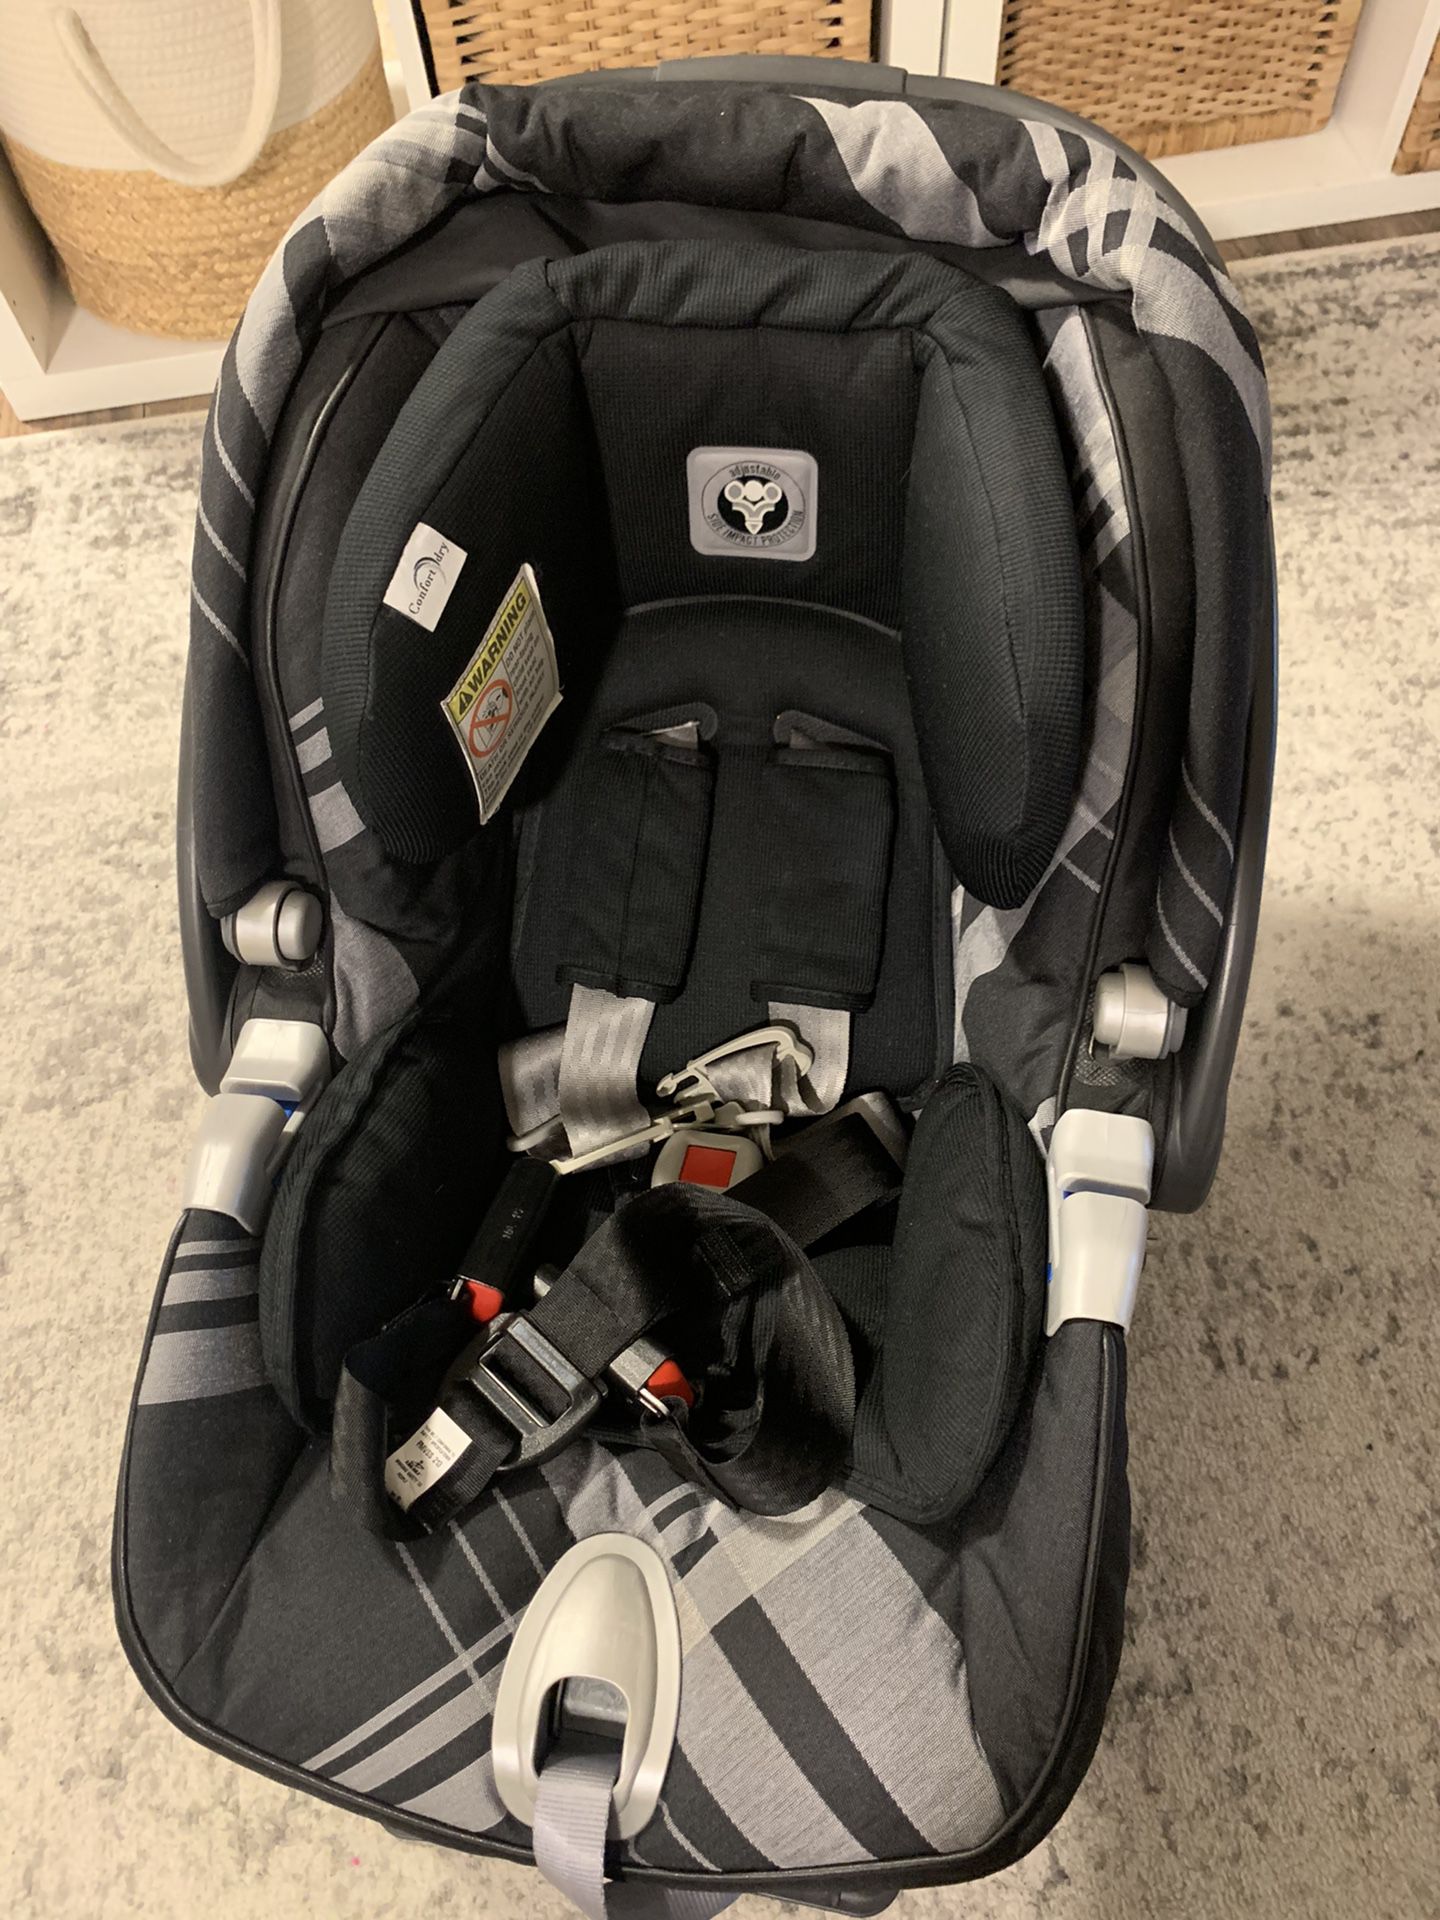 Infant Peg-Perego Car Seat